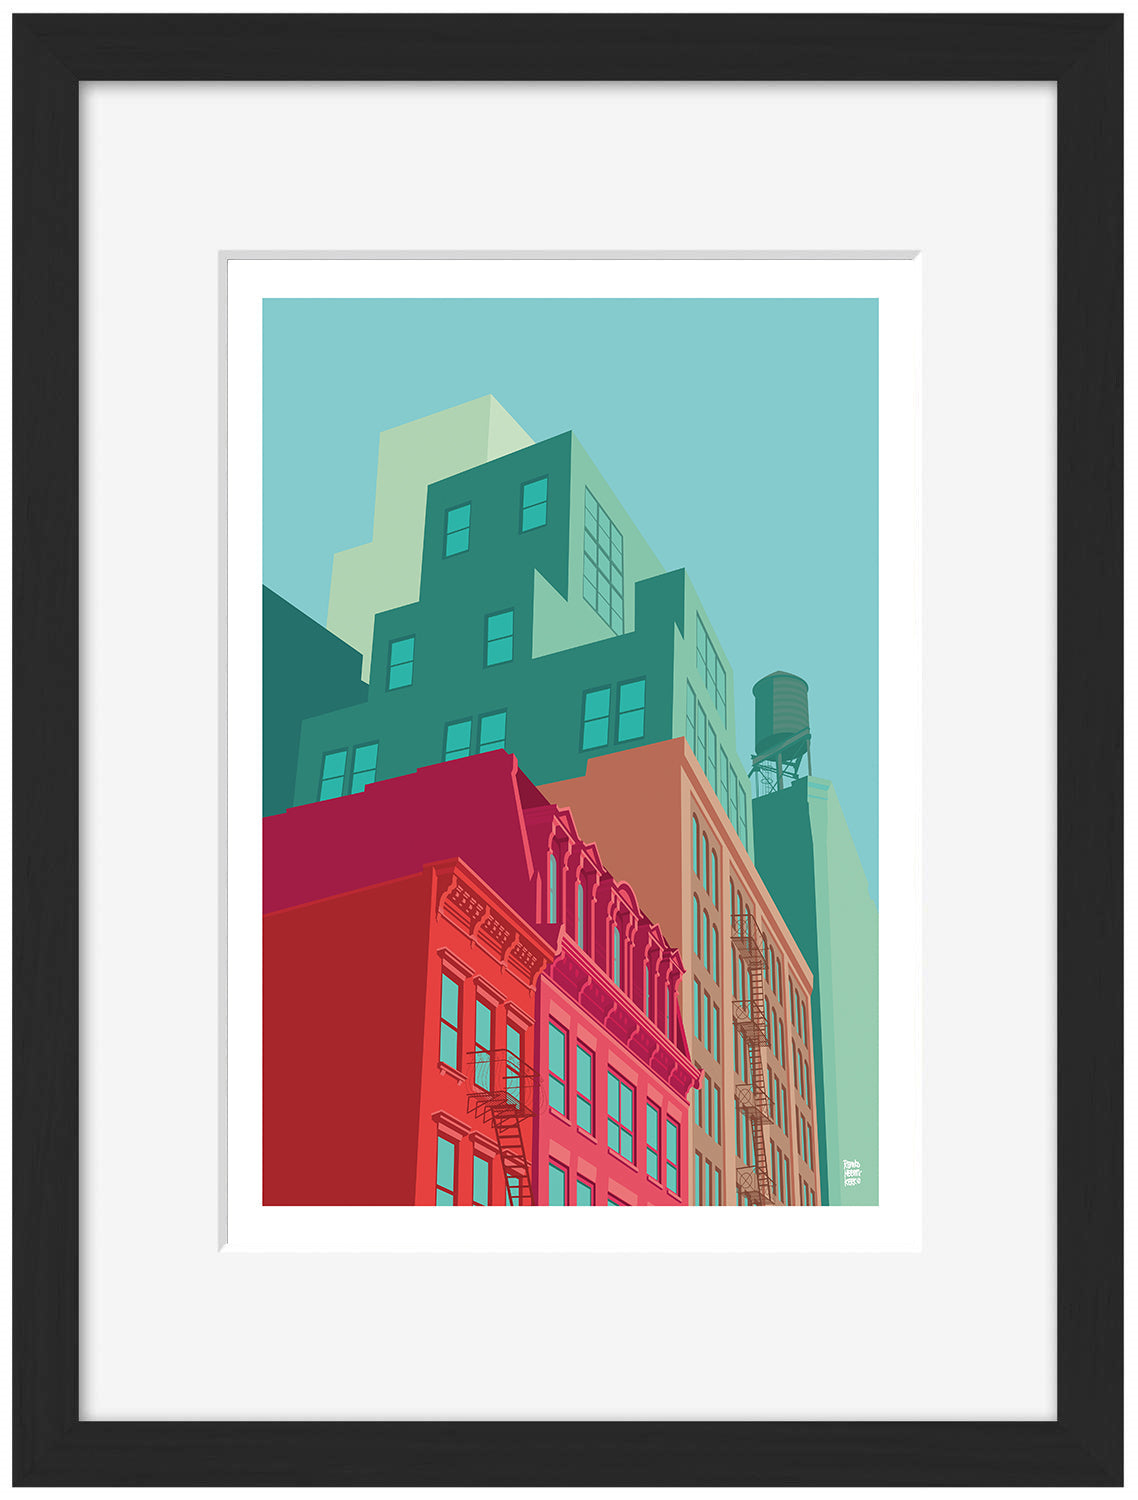 NYC Mulberry Street-print, remko-heemskerk-Framed Print-30 x 40 cm-BLUE SHAKER